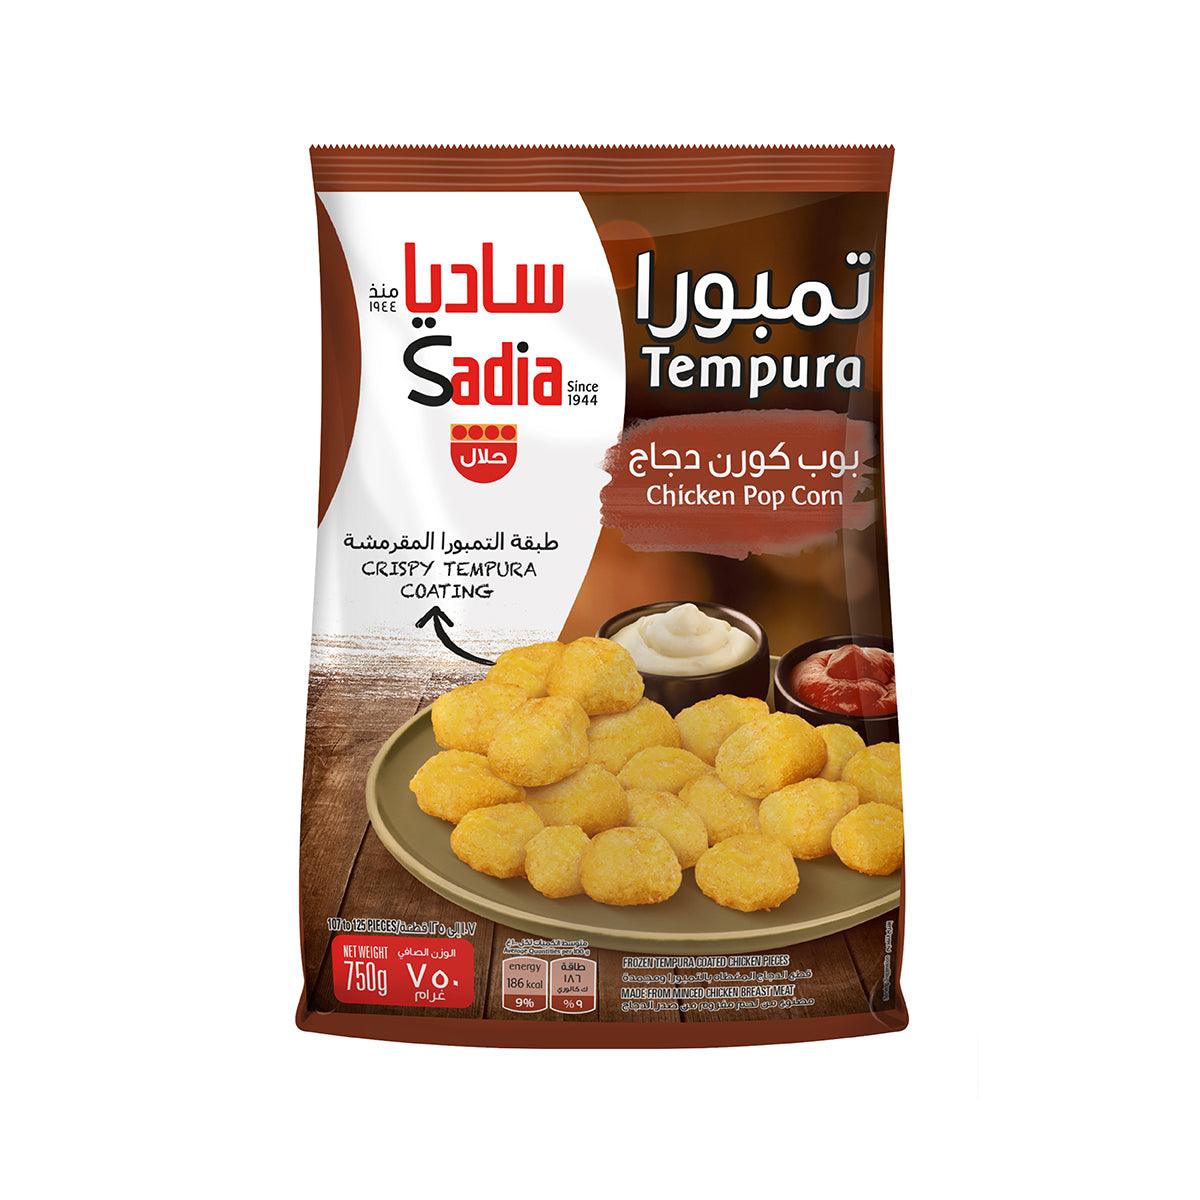 Sadia Chicken Pop Corn Tempura 750g